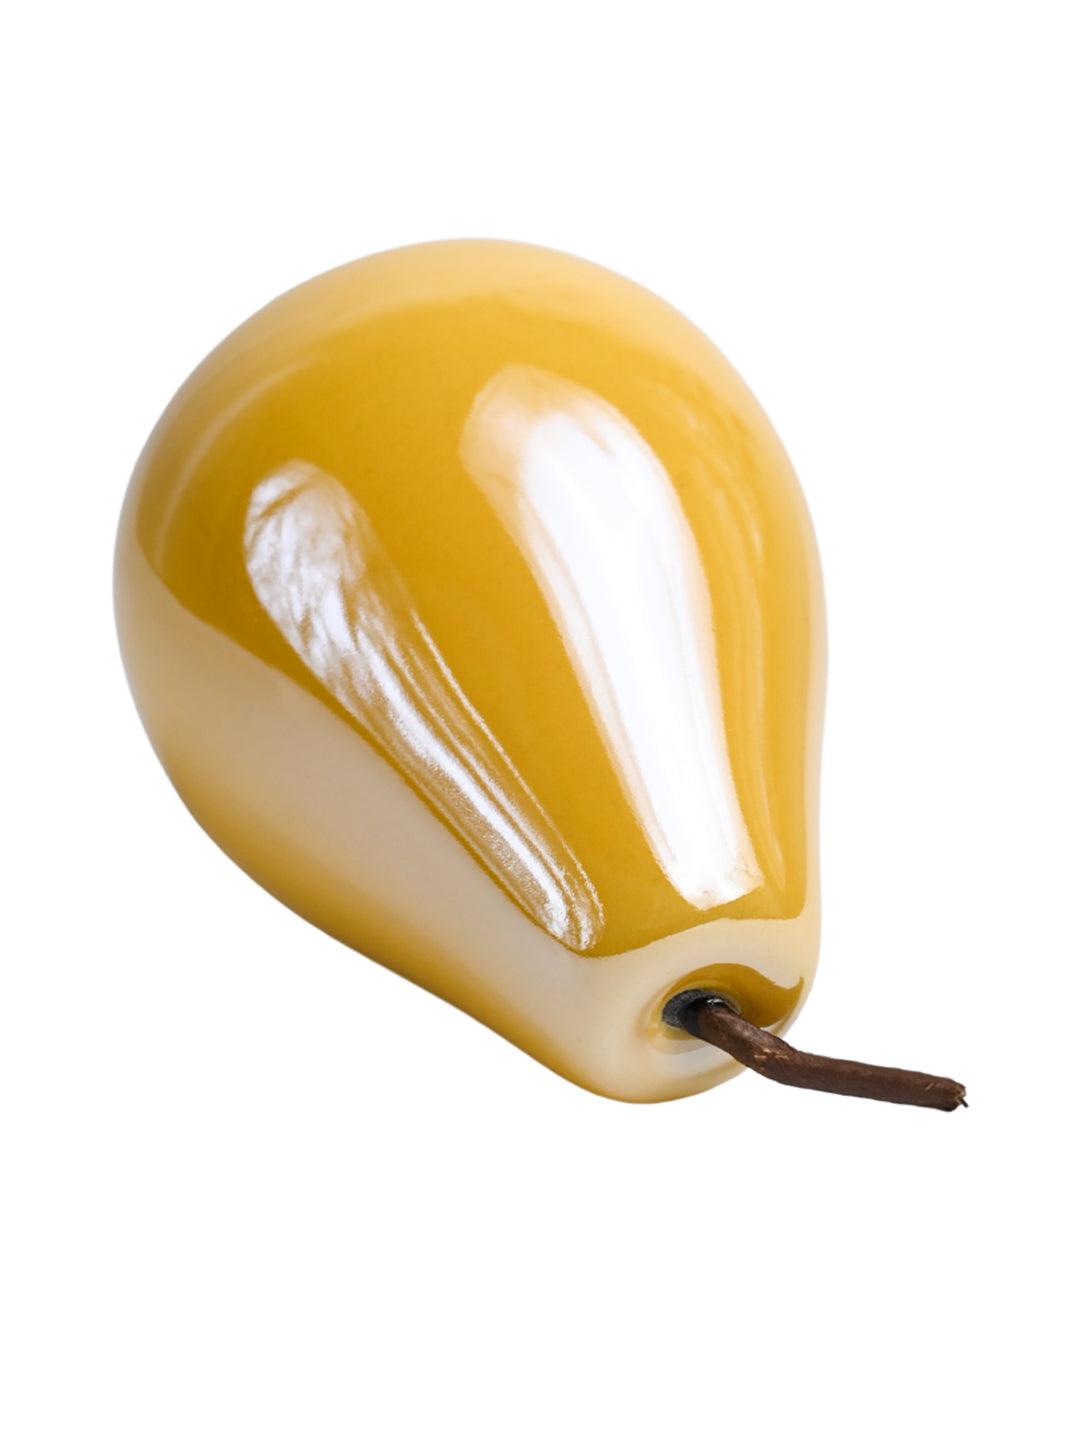 VON CASA Decorative Pear - Ceramic, Yellow - MARKET99